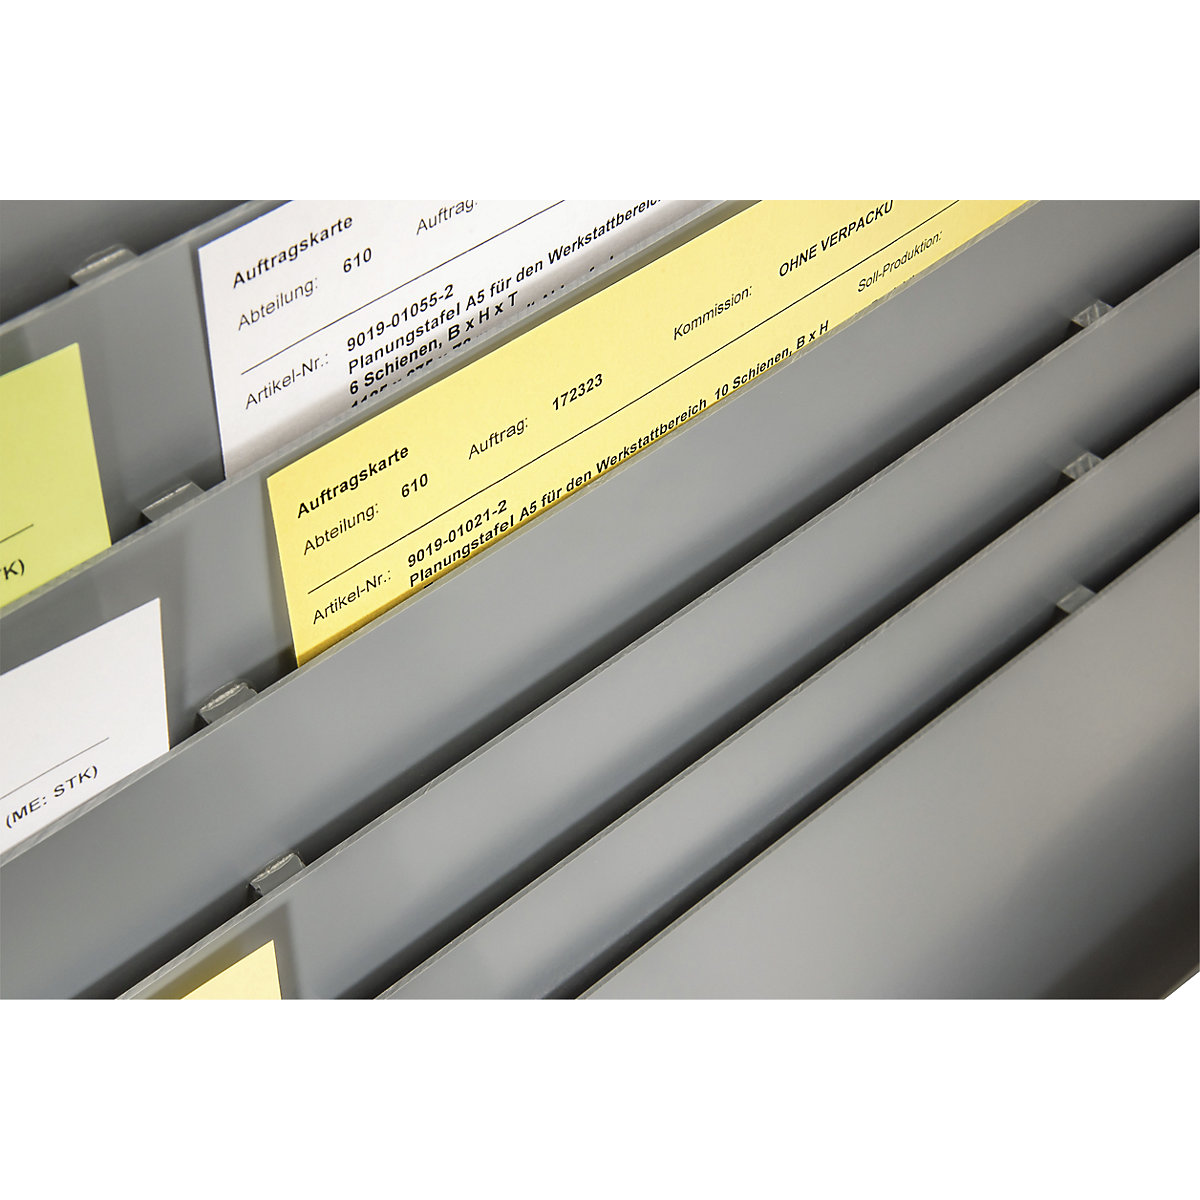 Panel modular clasificador para documentos – EICHNER (Imagen del producto 23)-22